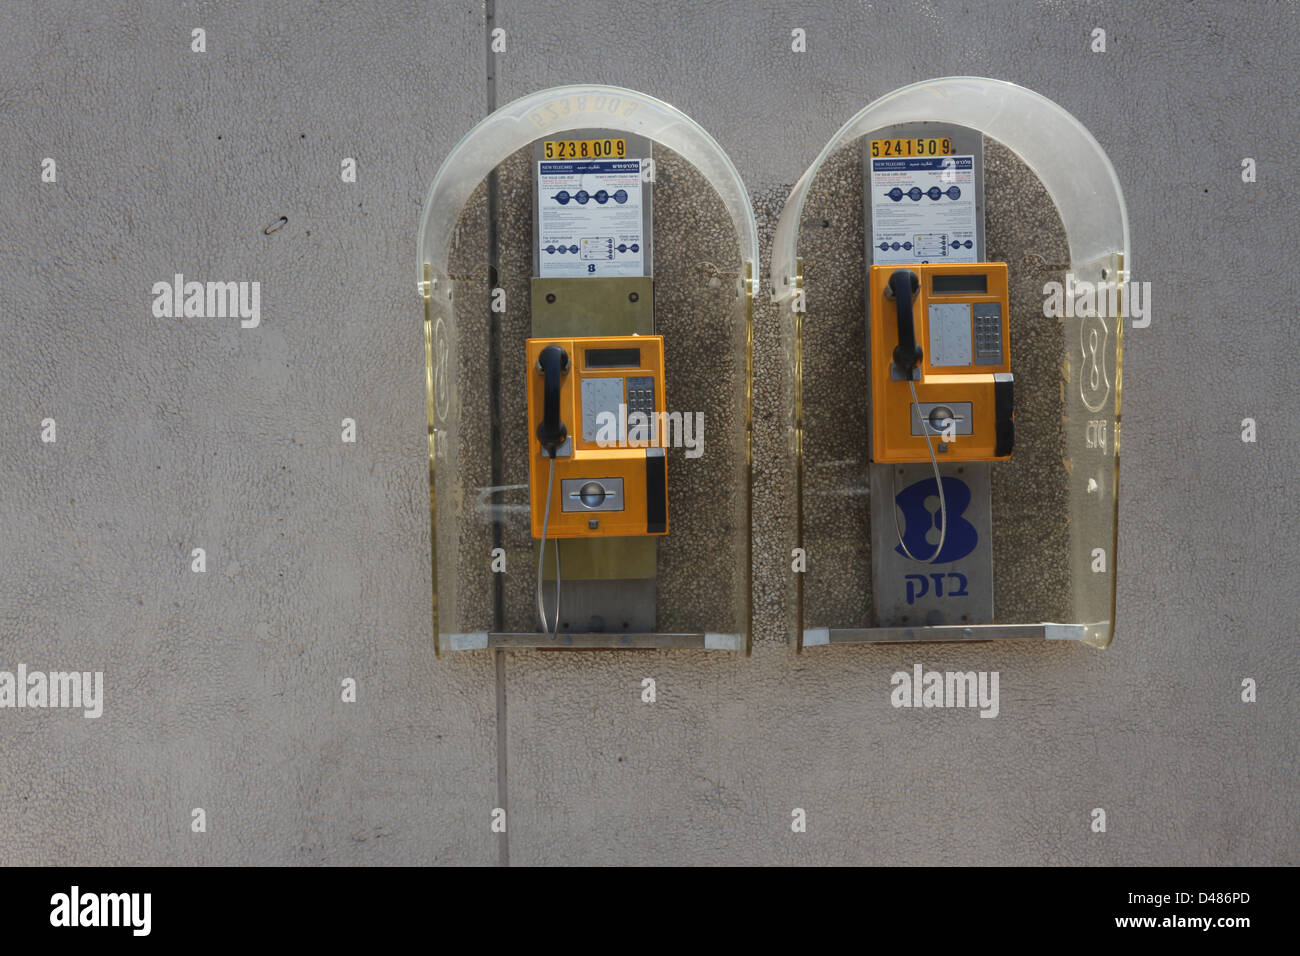 Israele, telefoni pubblici Foto Stock